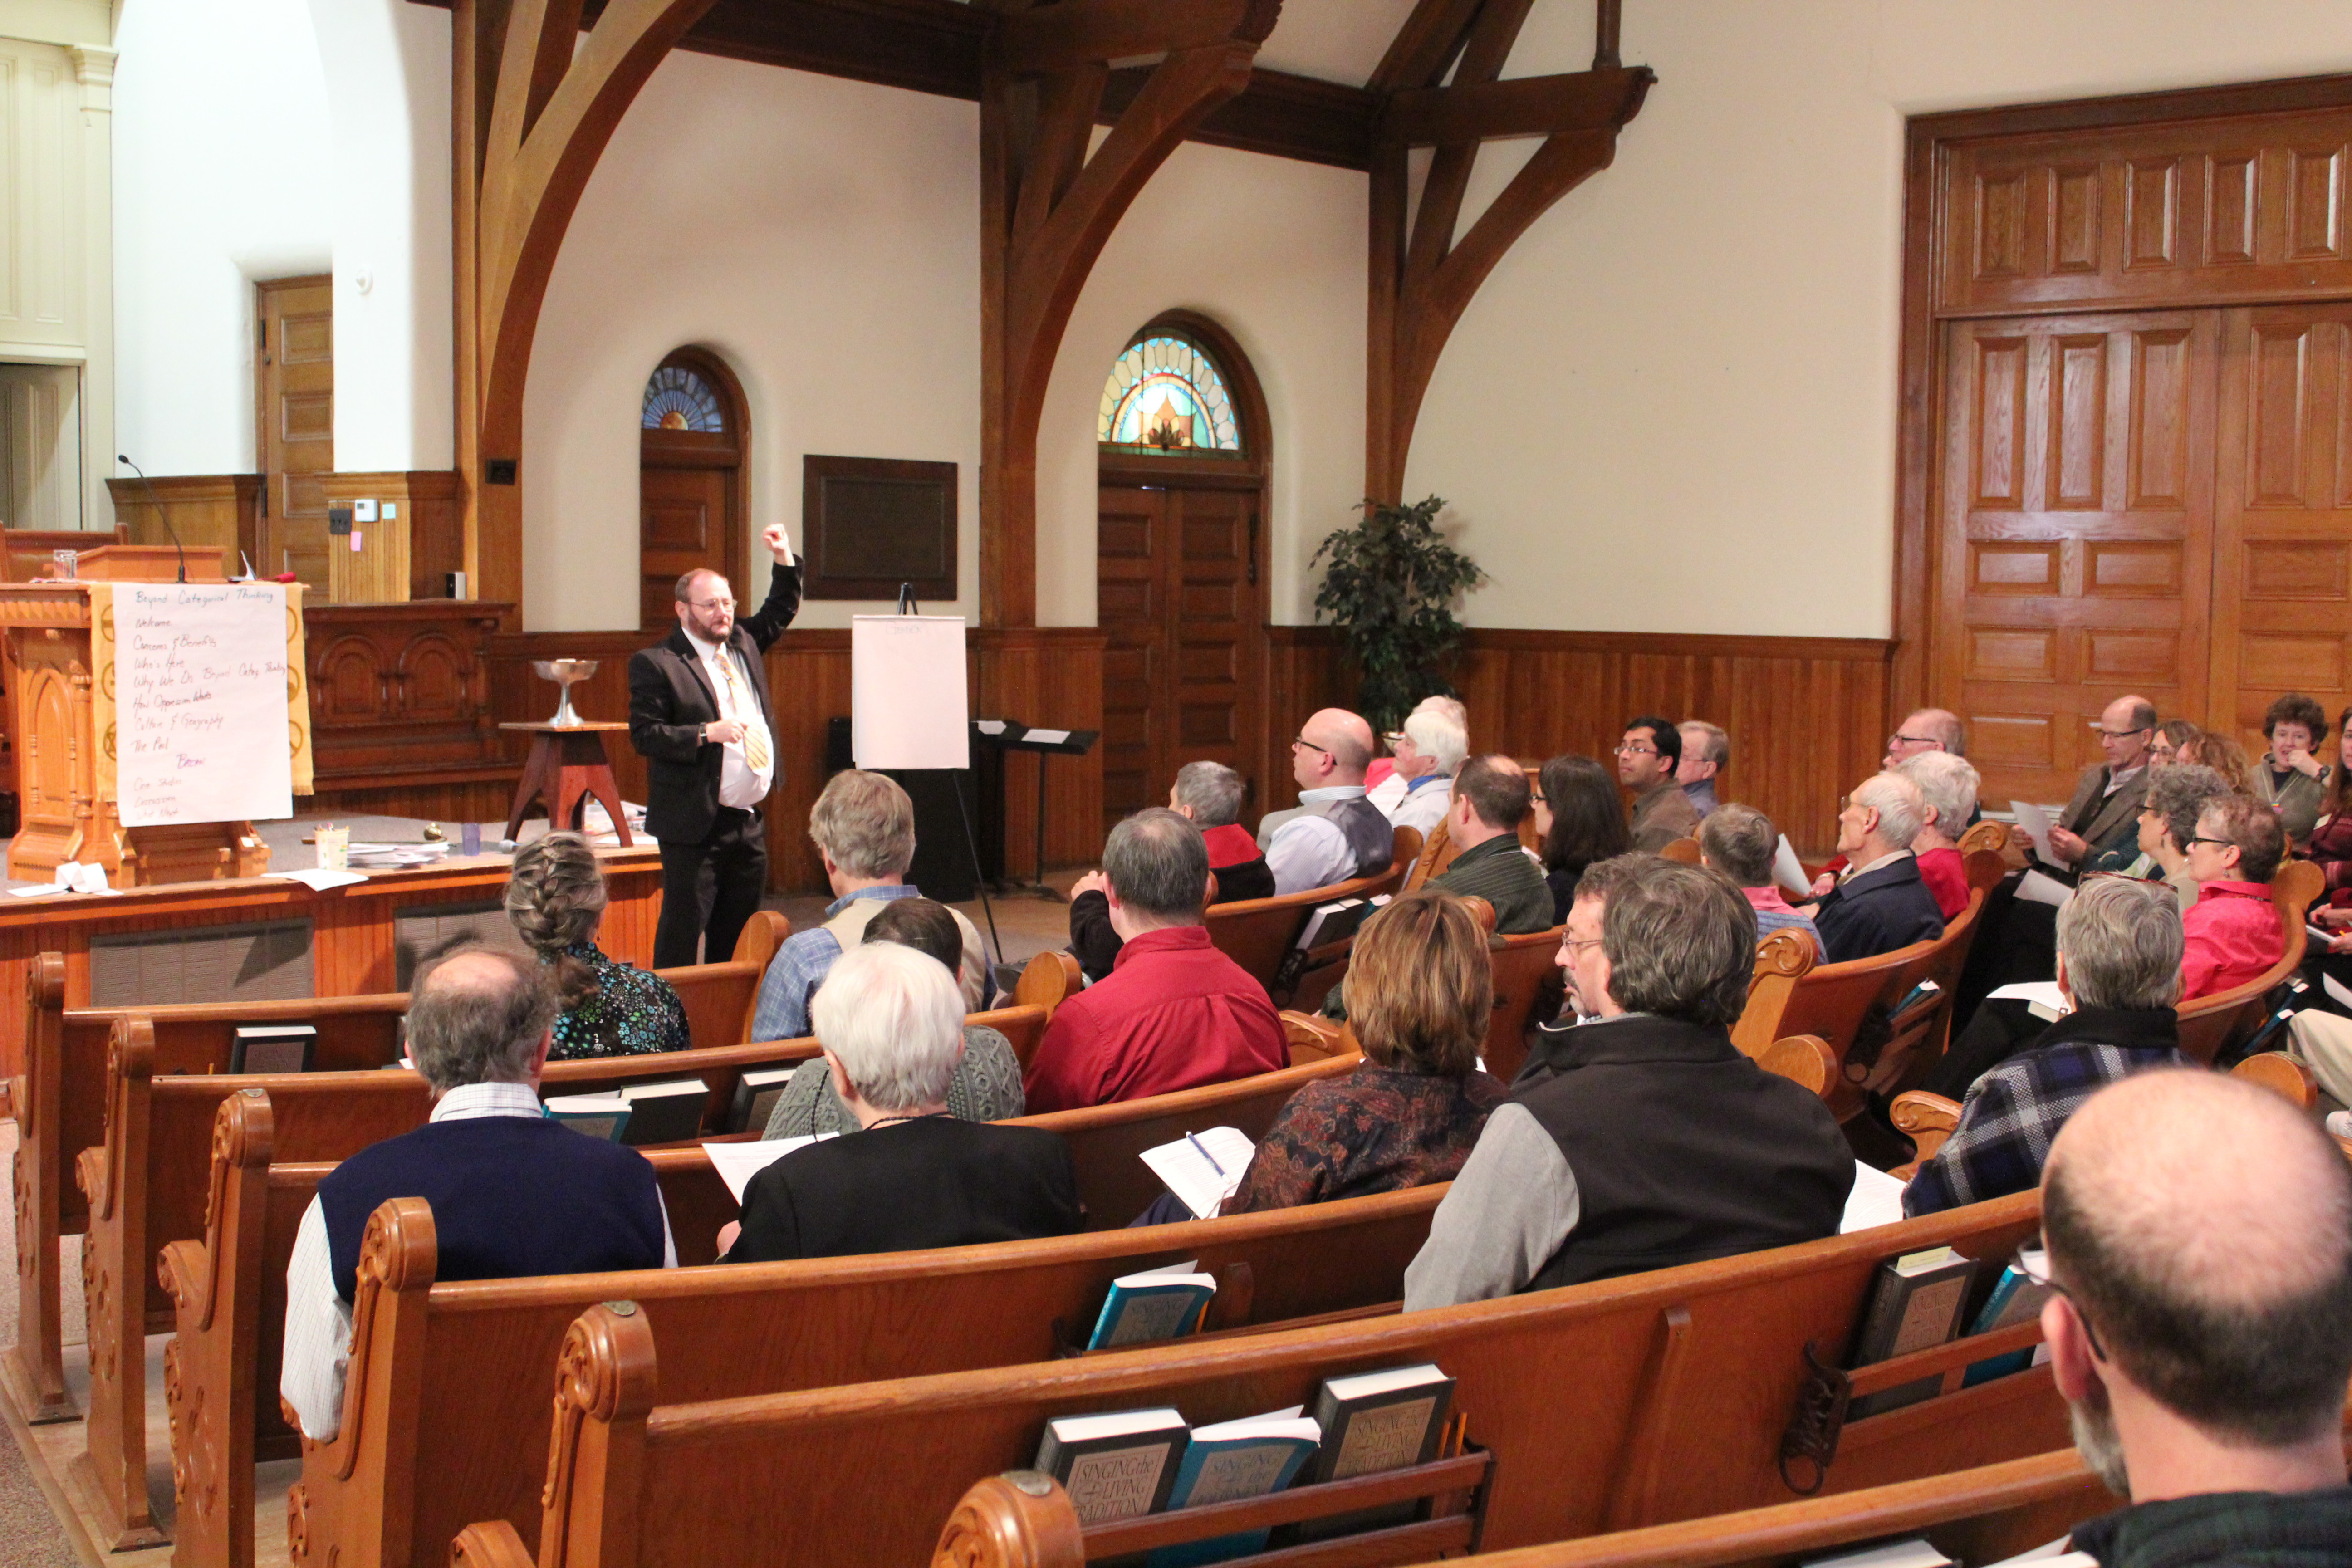 The Rev. Keith Kron led the BCT workshop on December 6.